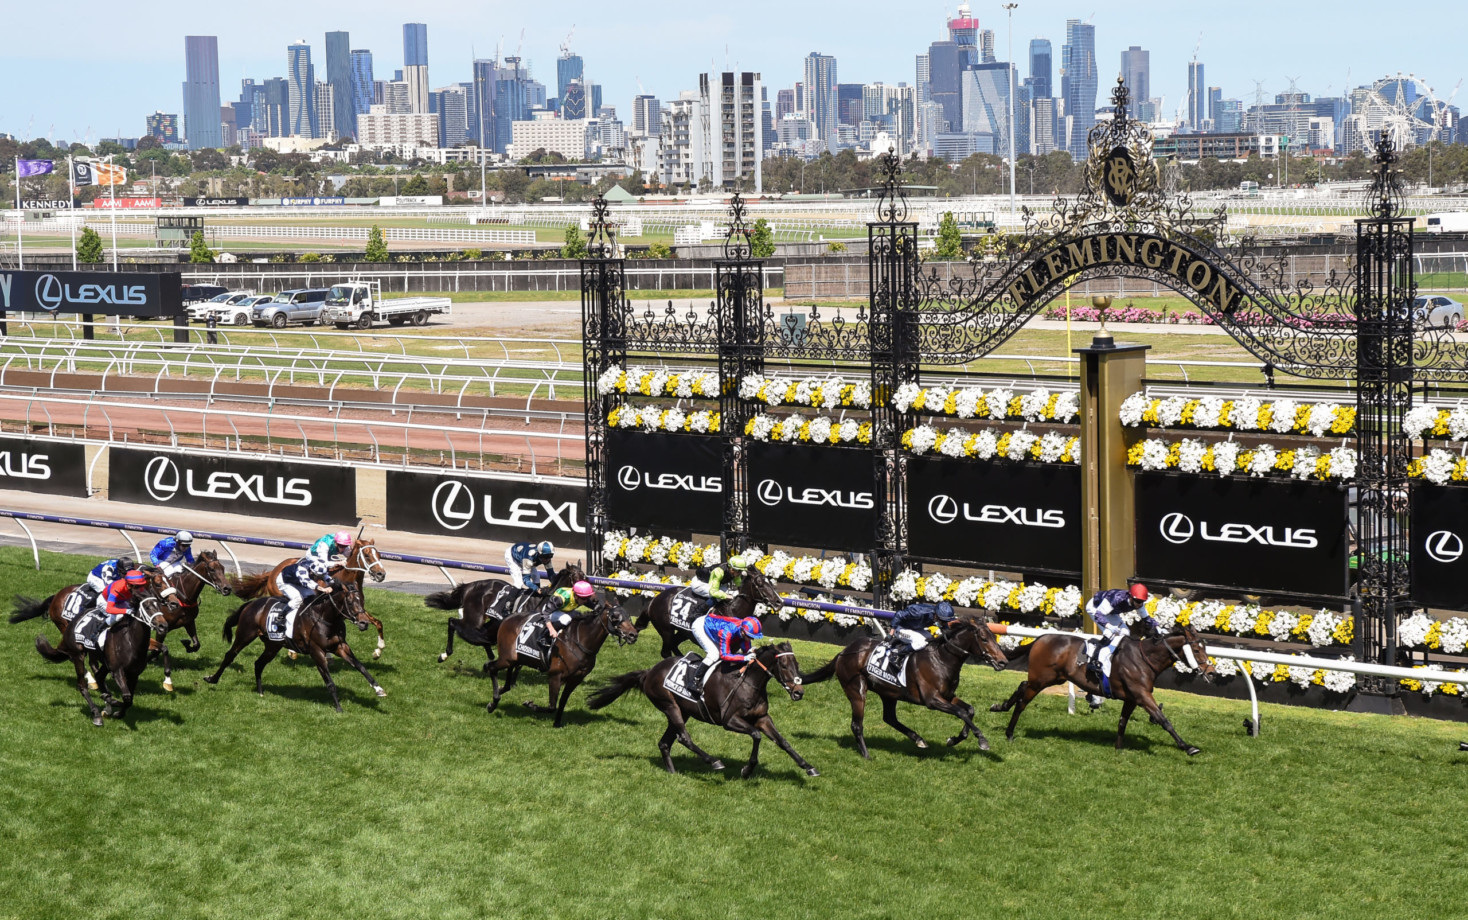 Melbourne Cup undergoes major changes for International horses